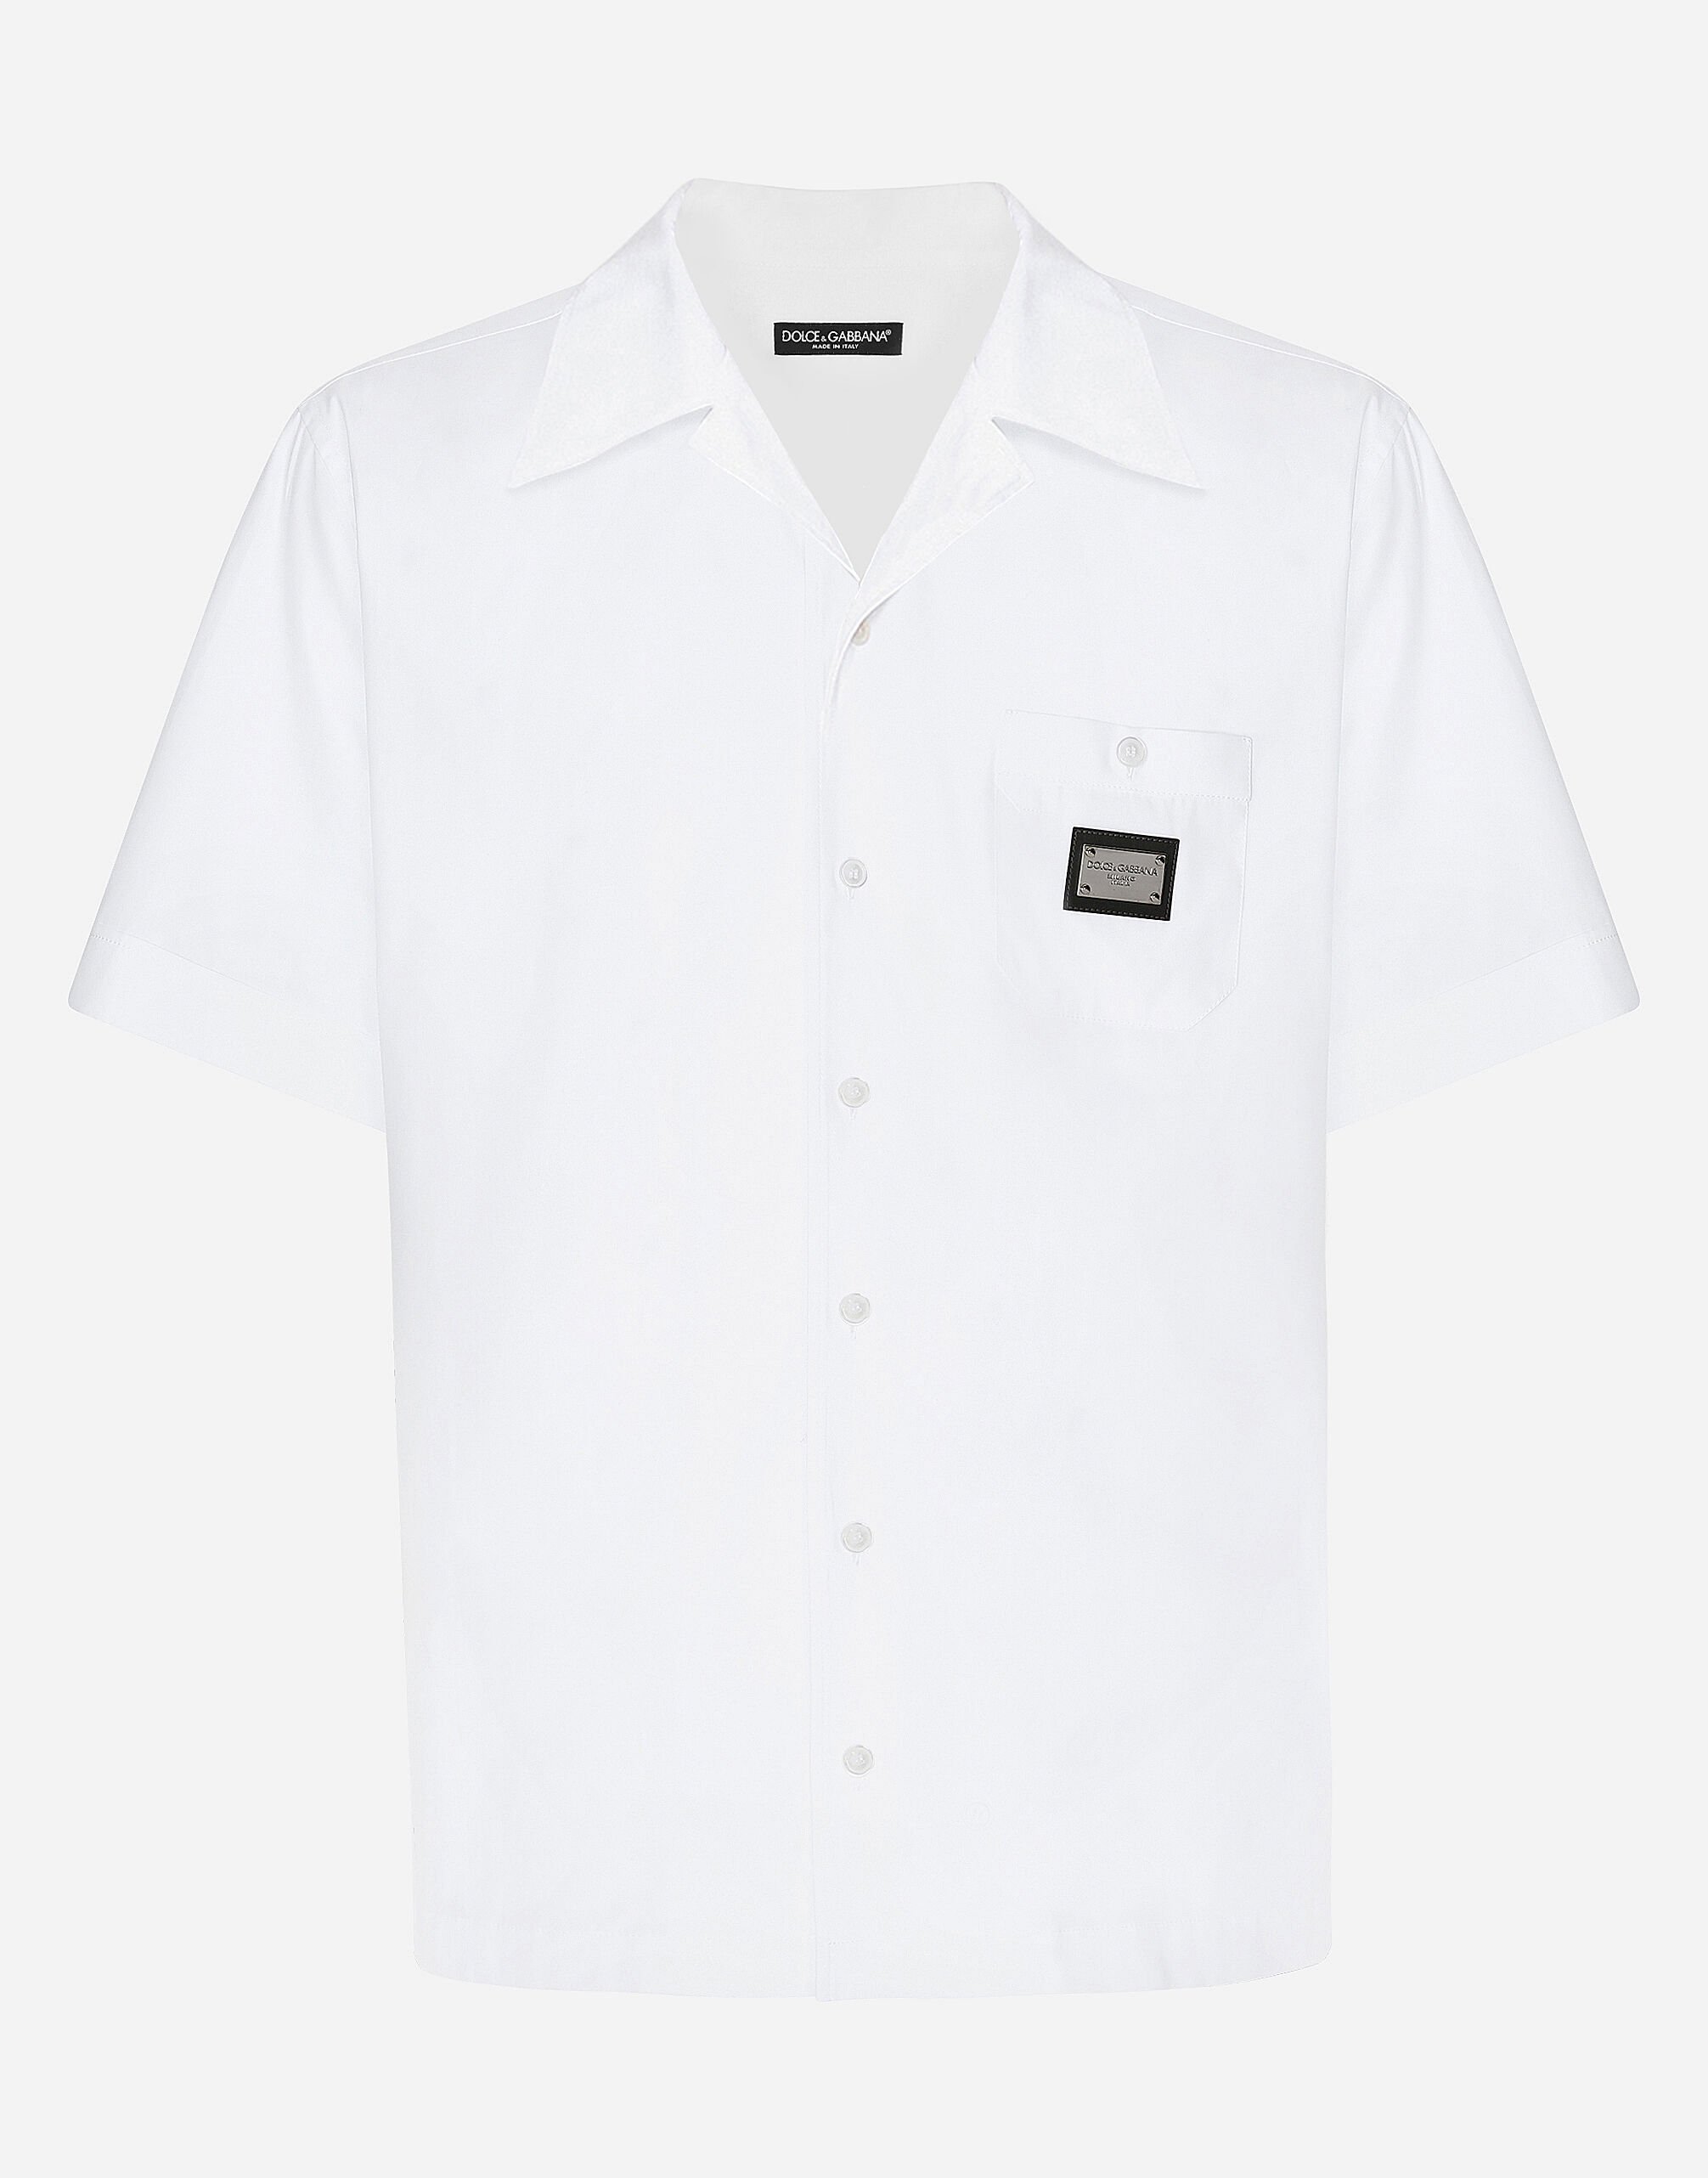 Dolce & Gabbana Cotton Hawaiian shirt with branded tag Print G5IF1THI1QA